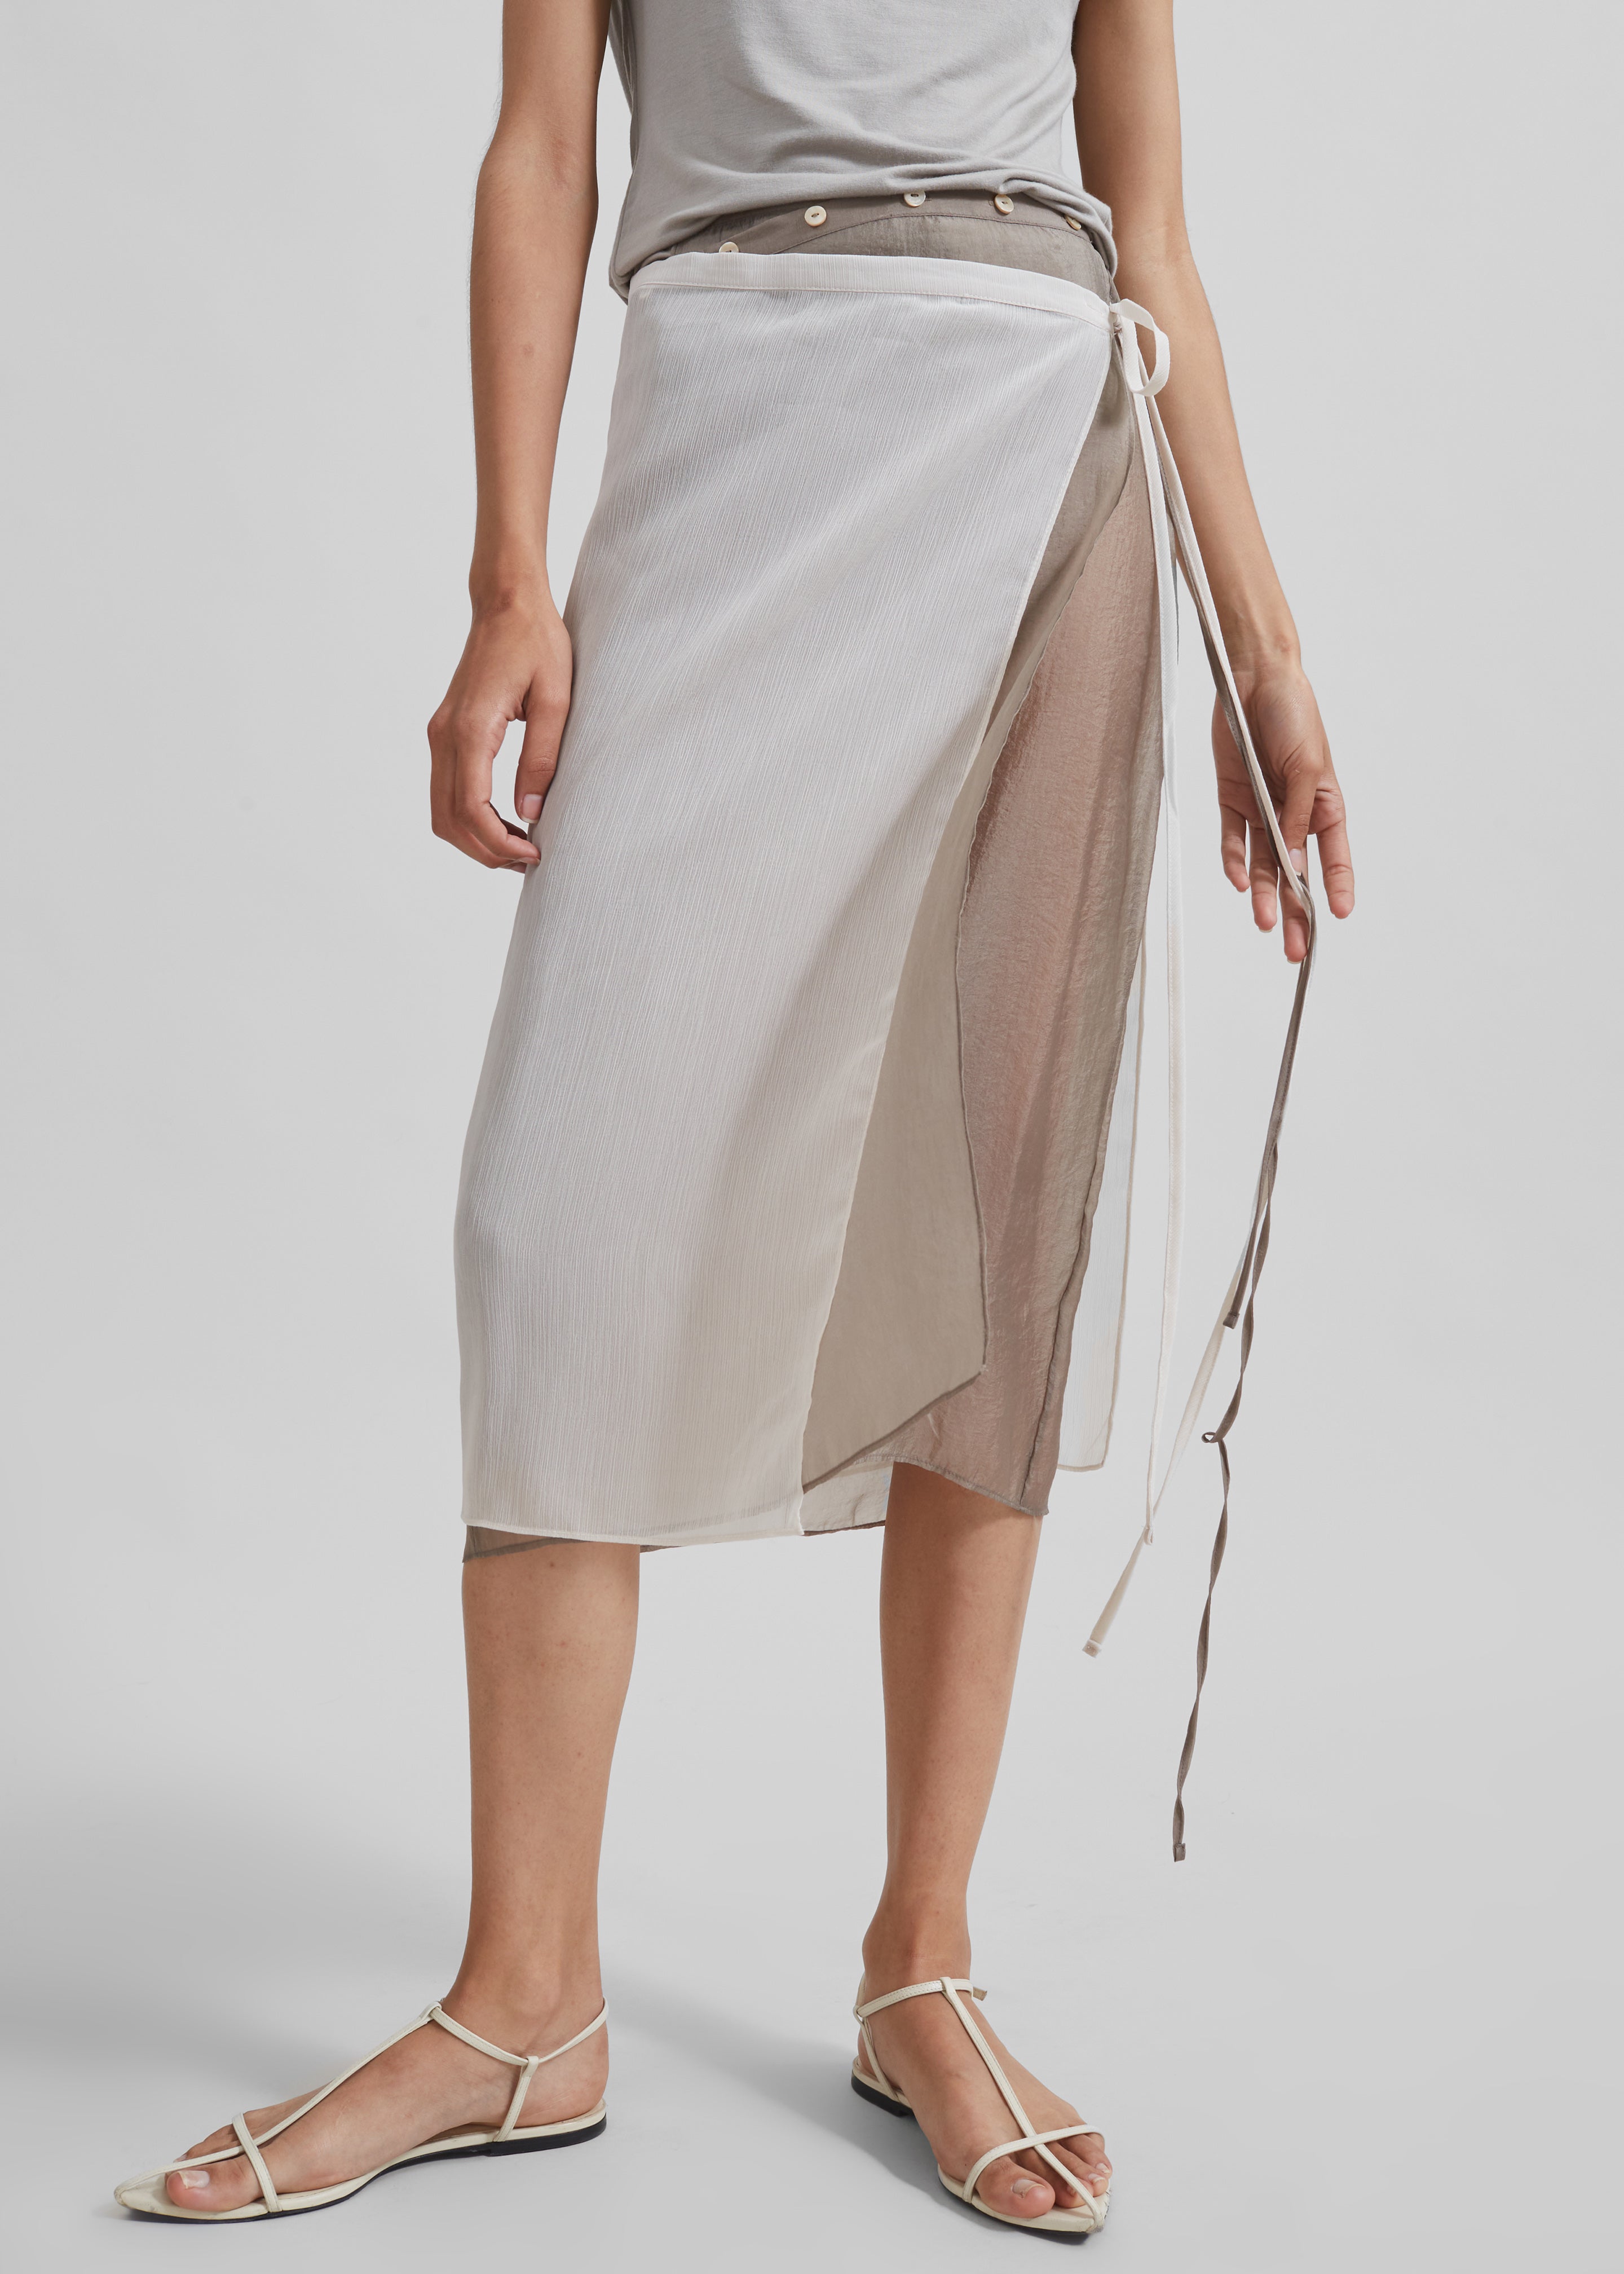 Tia Sheer Layered Skirt - Beige - 8